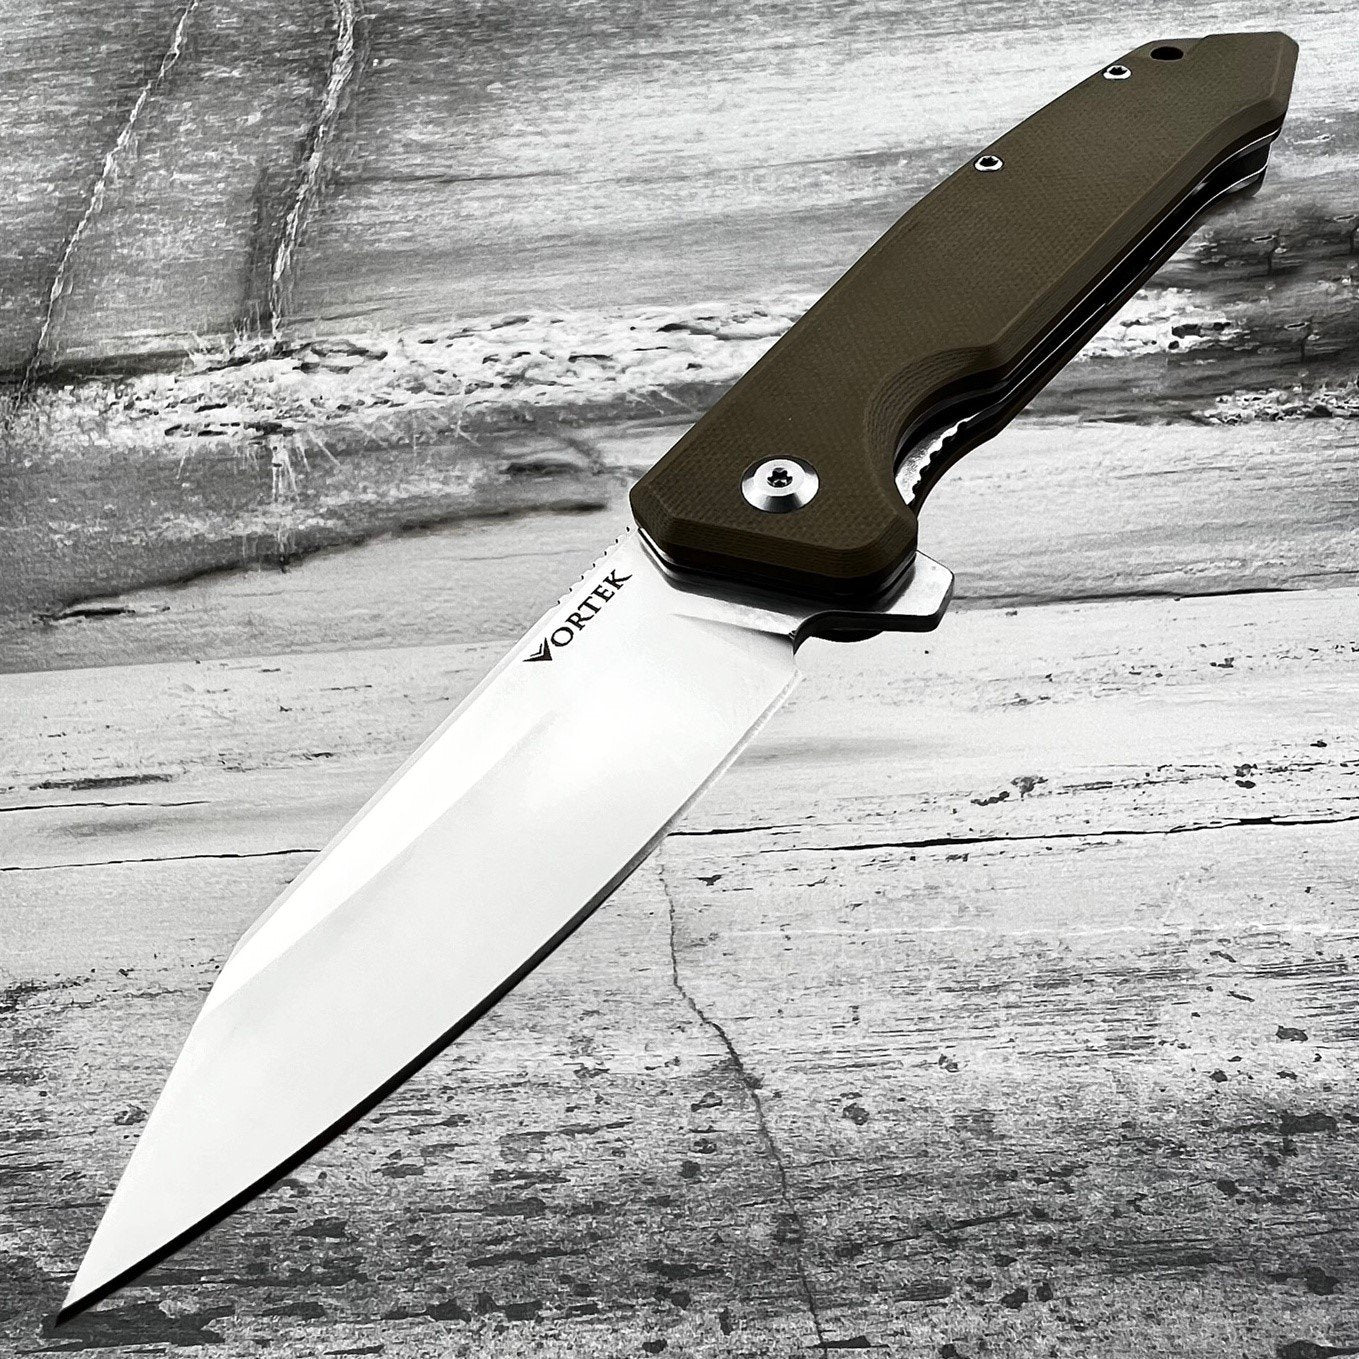 RECOIL: Black G10 Handles, D2 Stainless Steel Blade